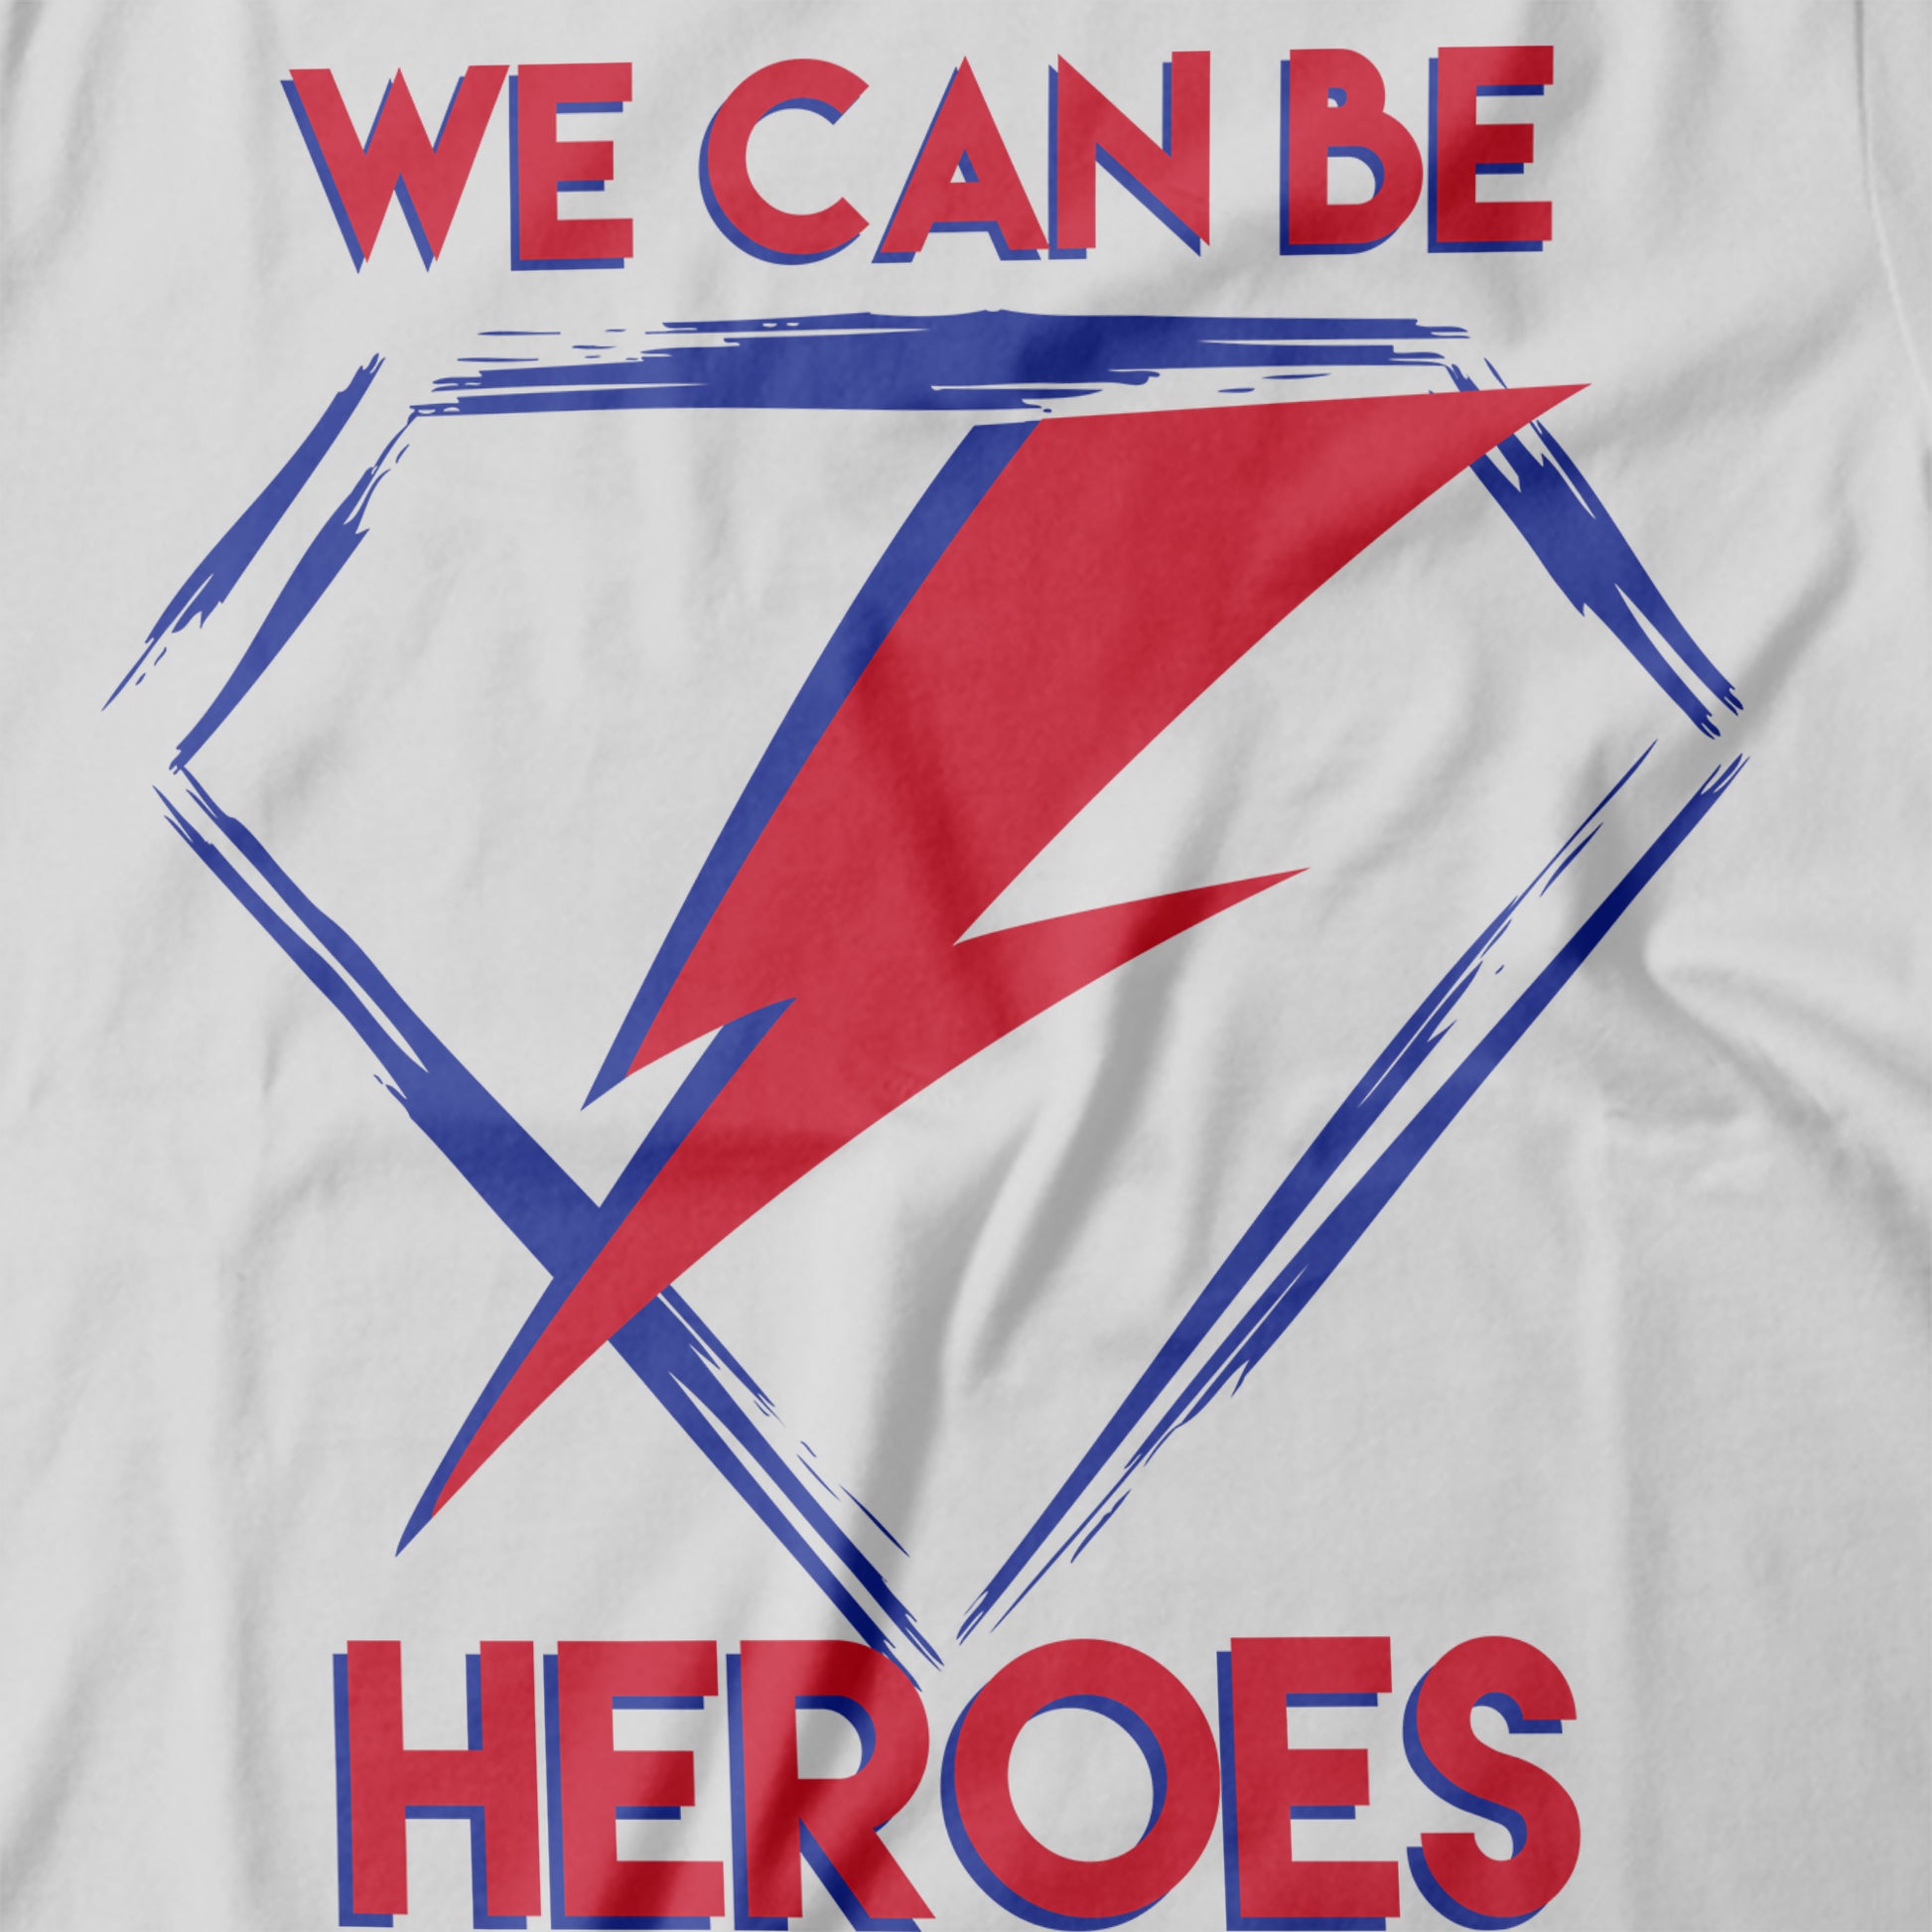 David Bowie - Heroes - Women's T-Shirt Detail